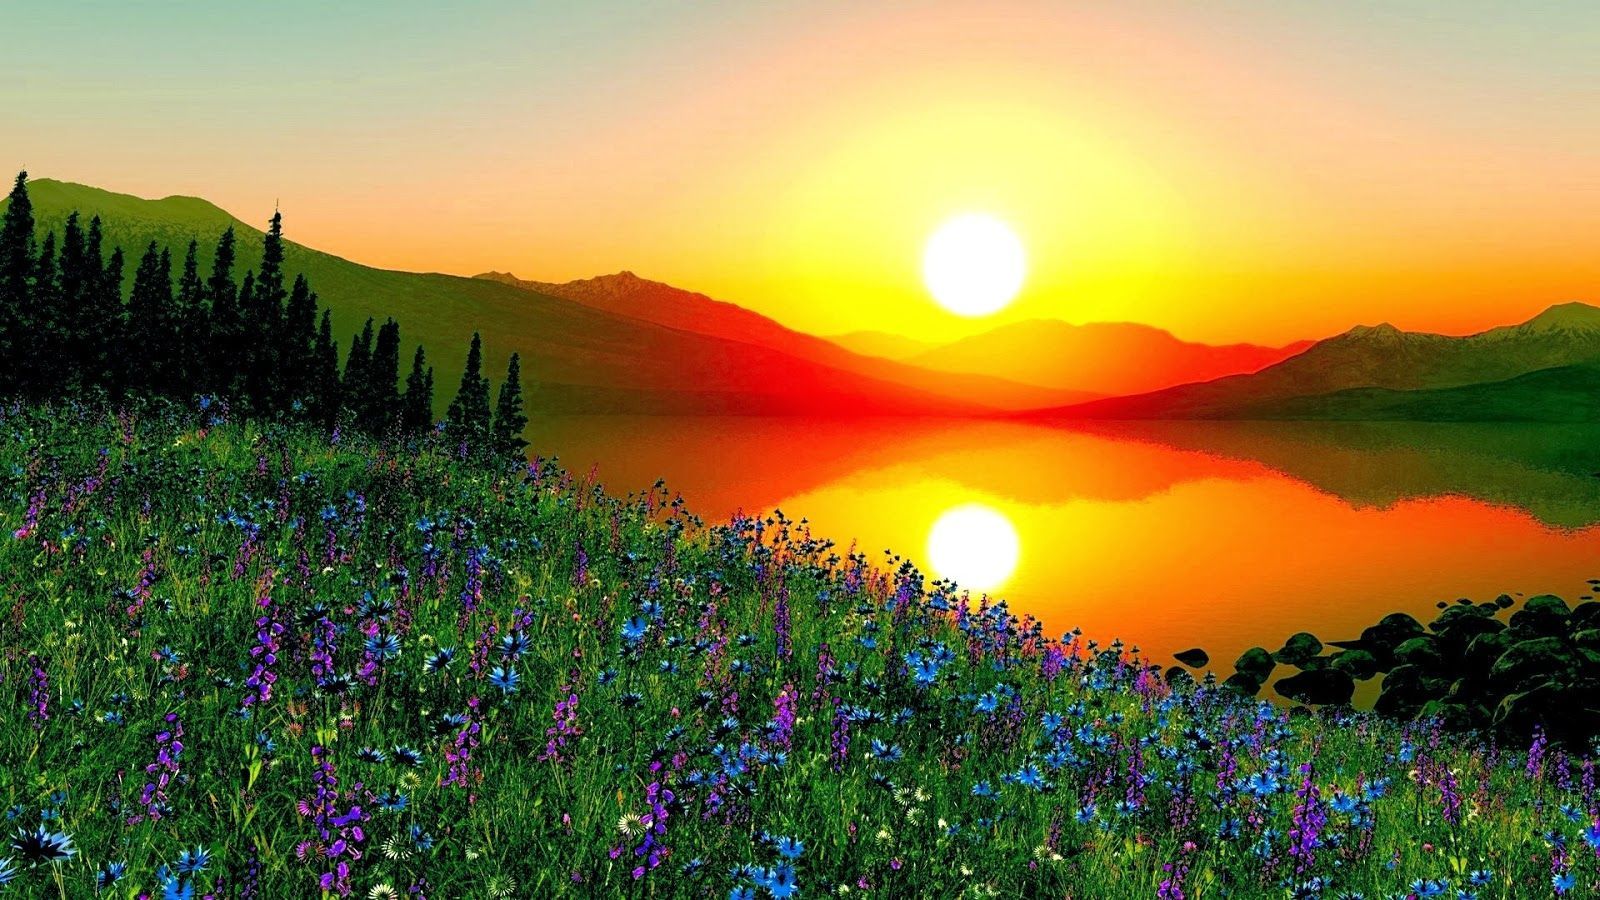 Most Beautiful Sunrise In The World 2781. Sunrise Wallpaper, Good Morning Sunrise, Beautiful Sunrise